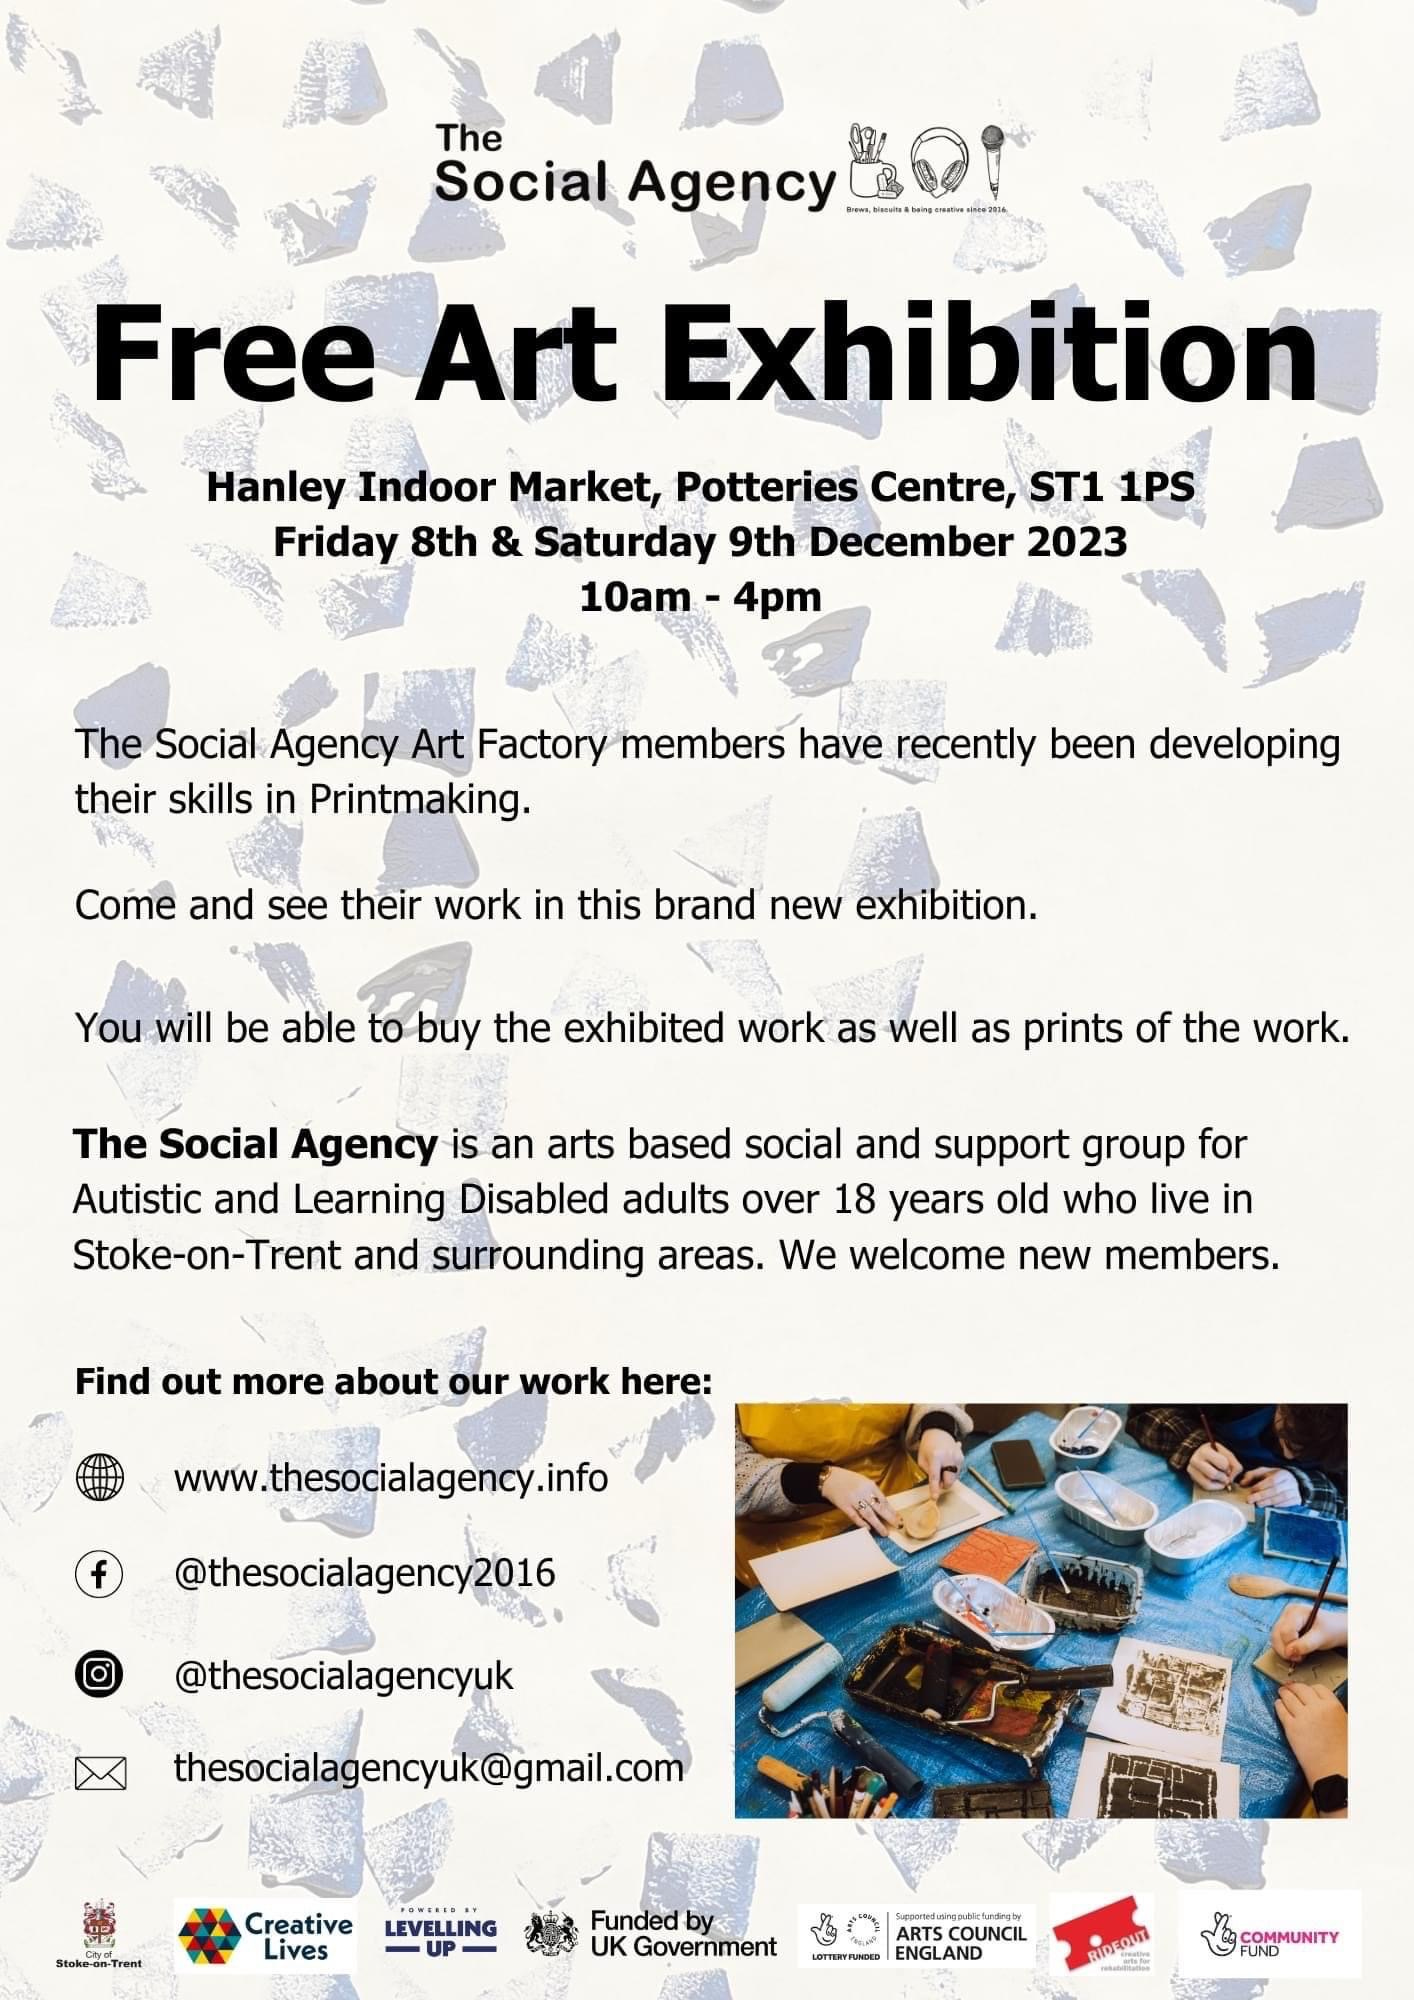 poster for The Social Agency's exhibition in Hanley Indoor Market